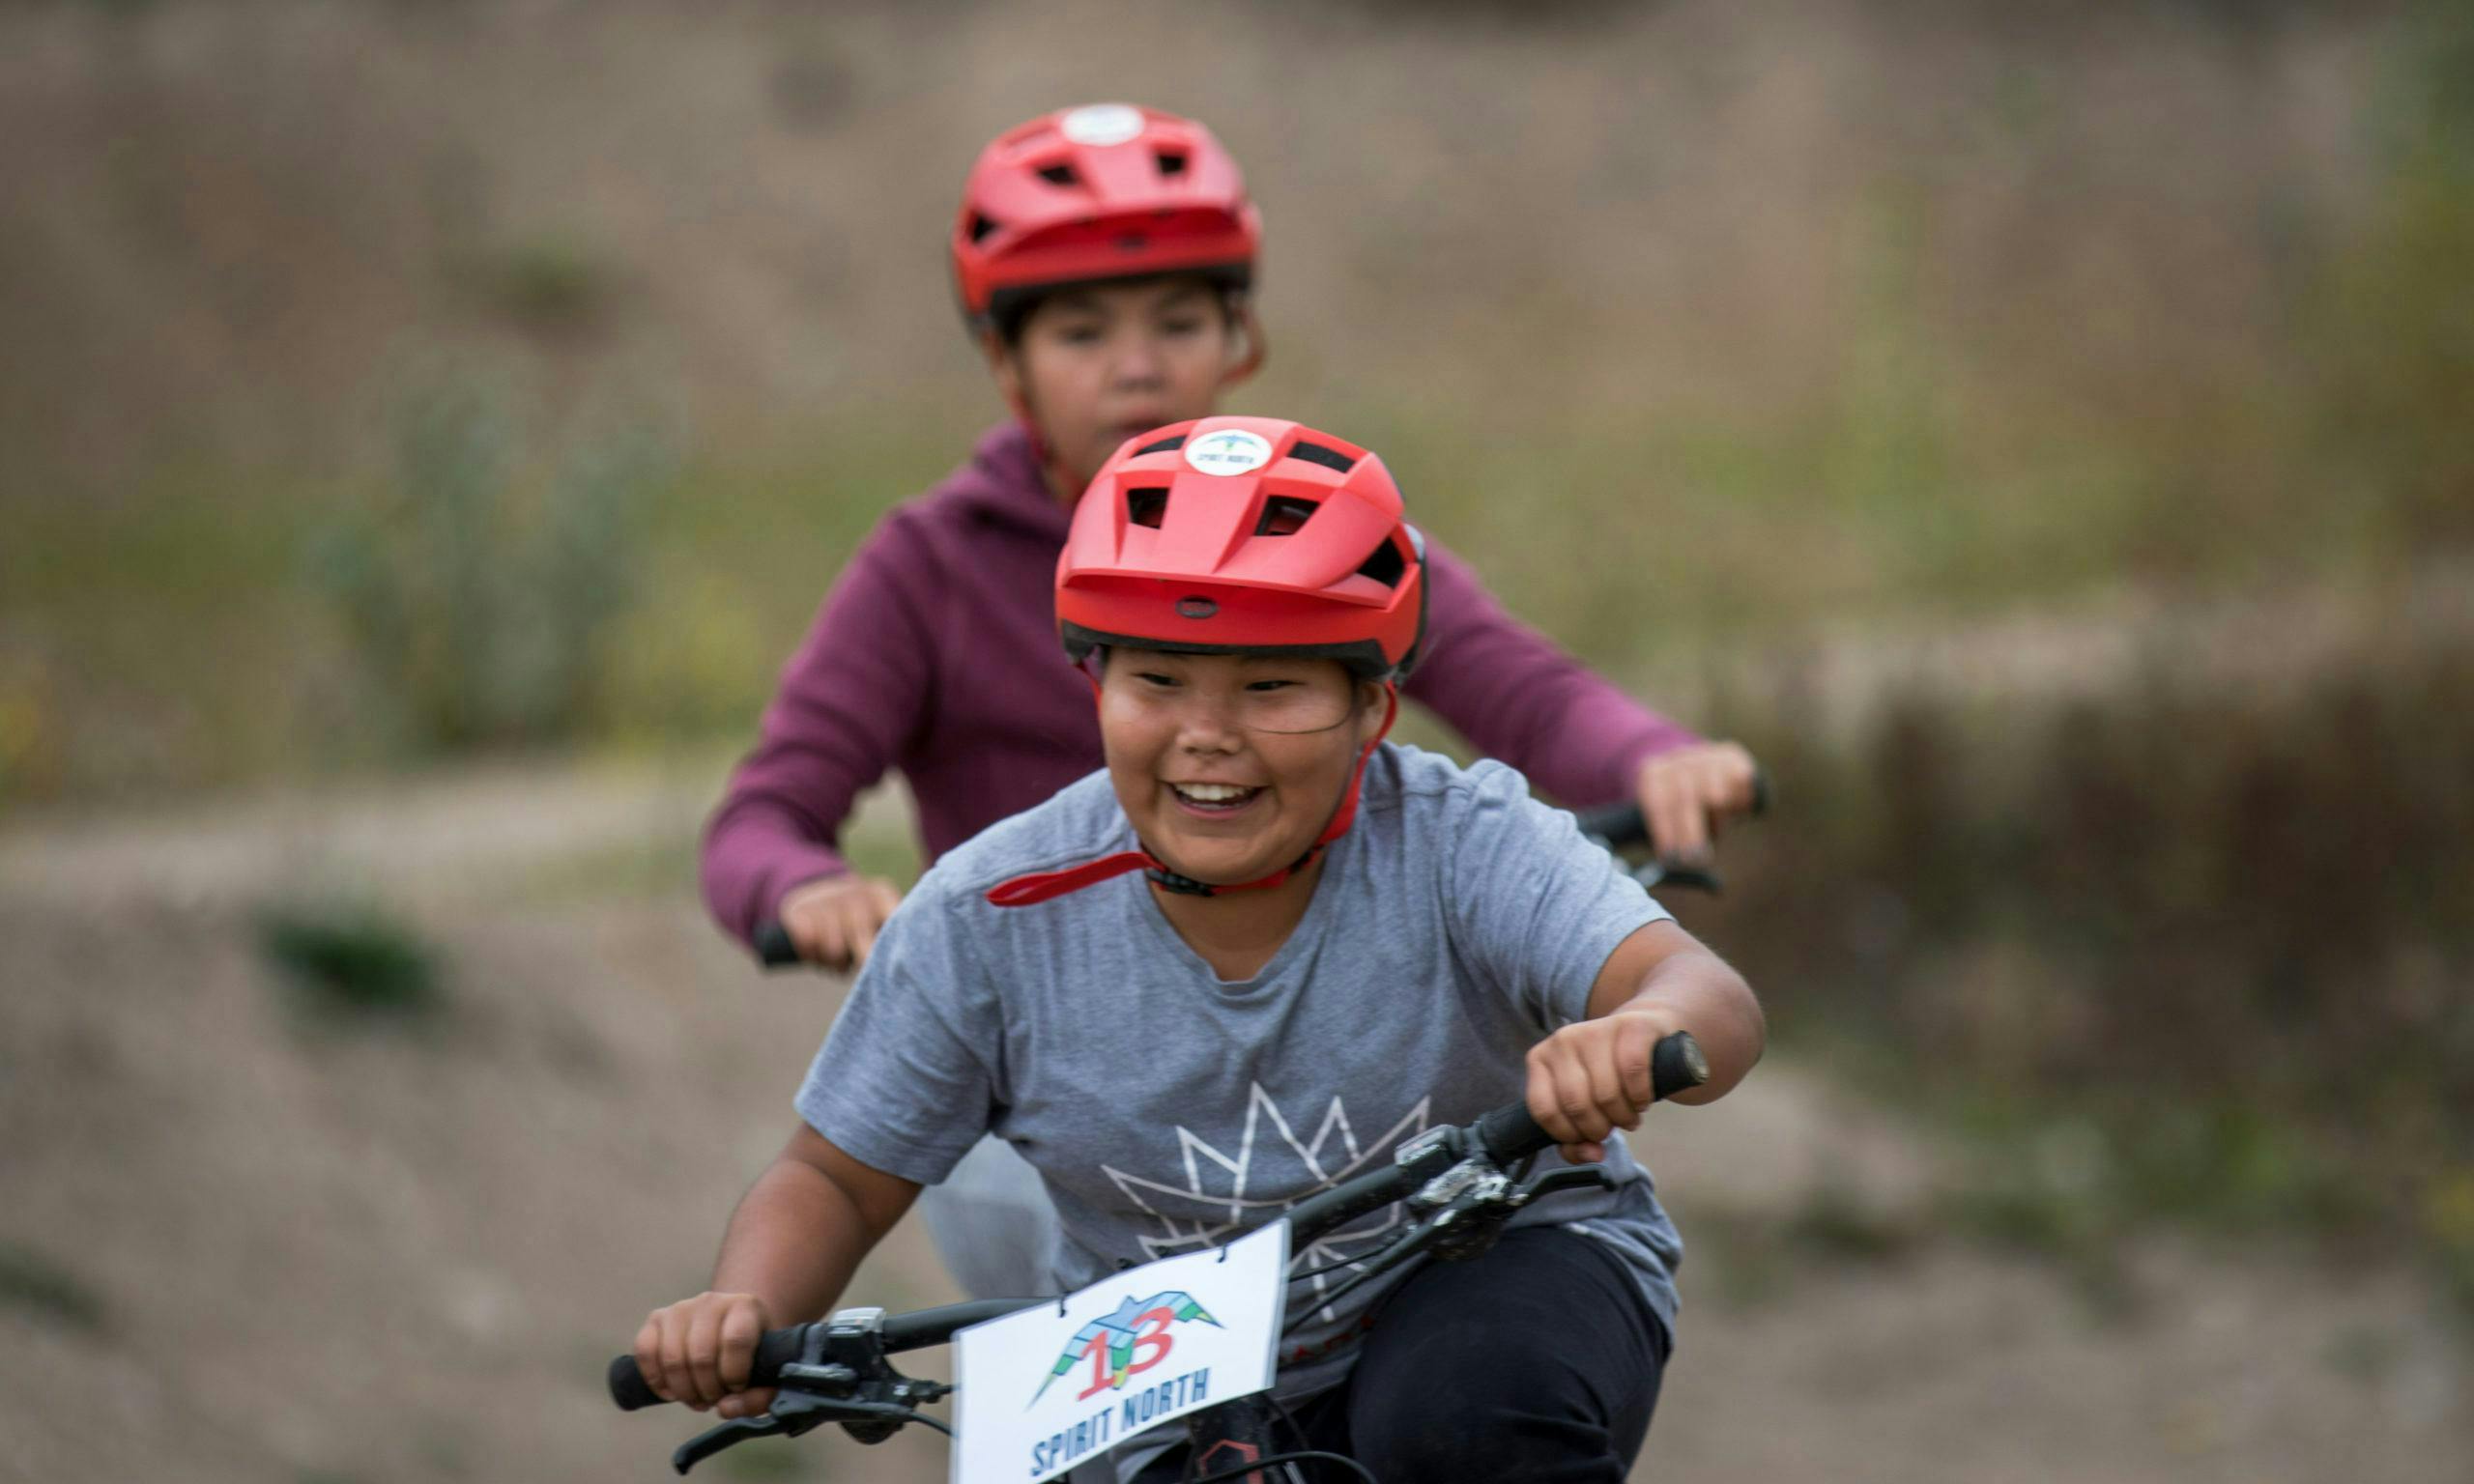 Kids mountain biking and having fun